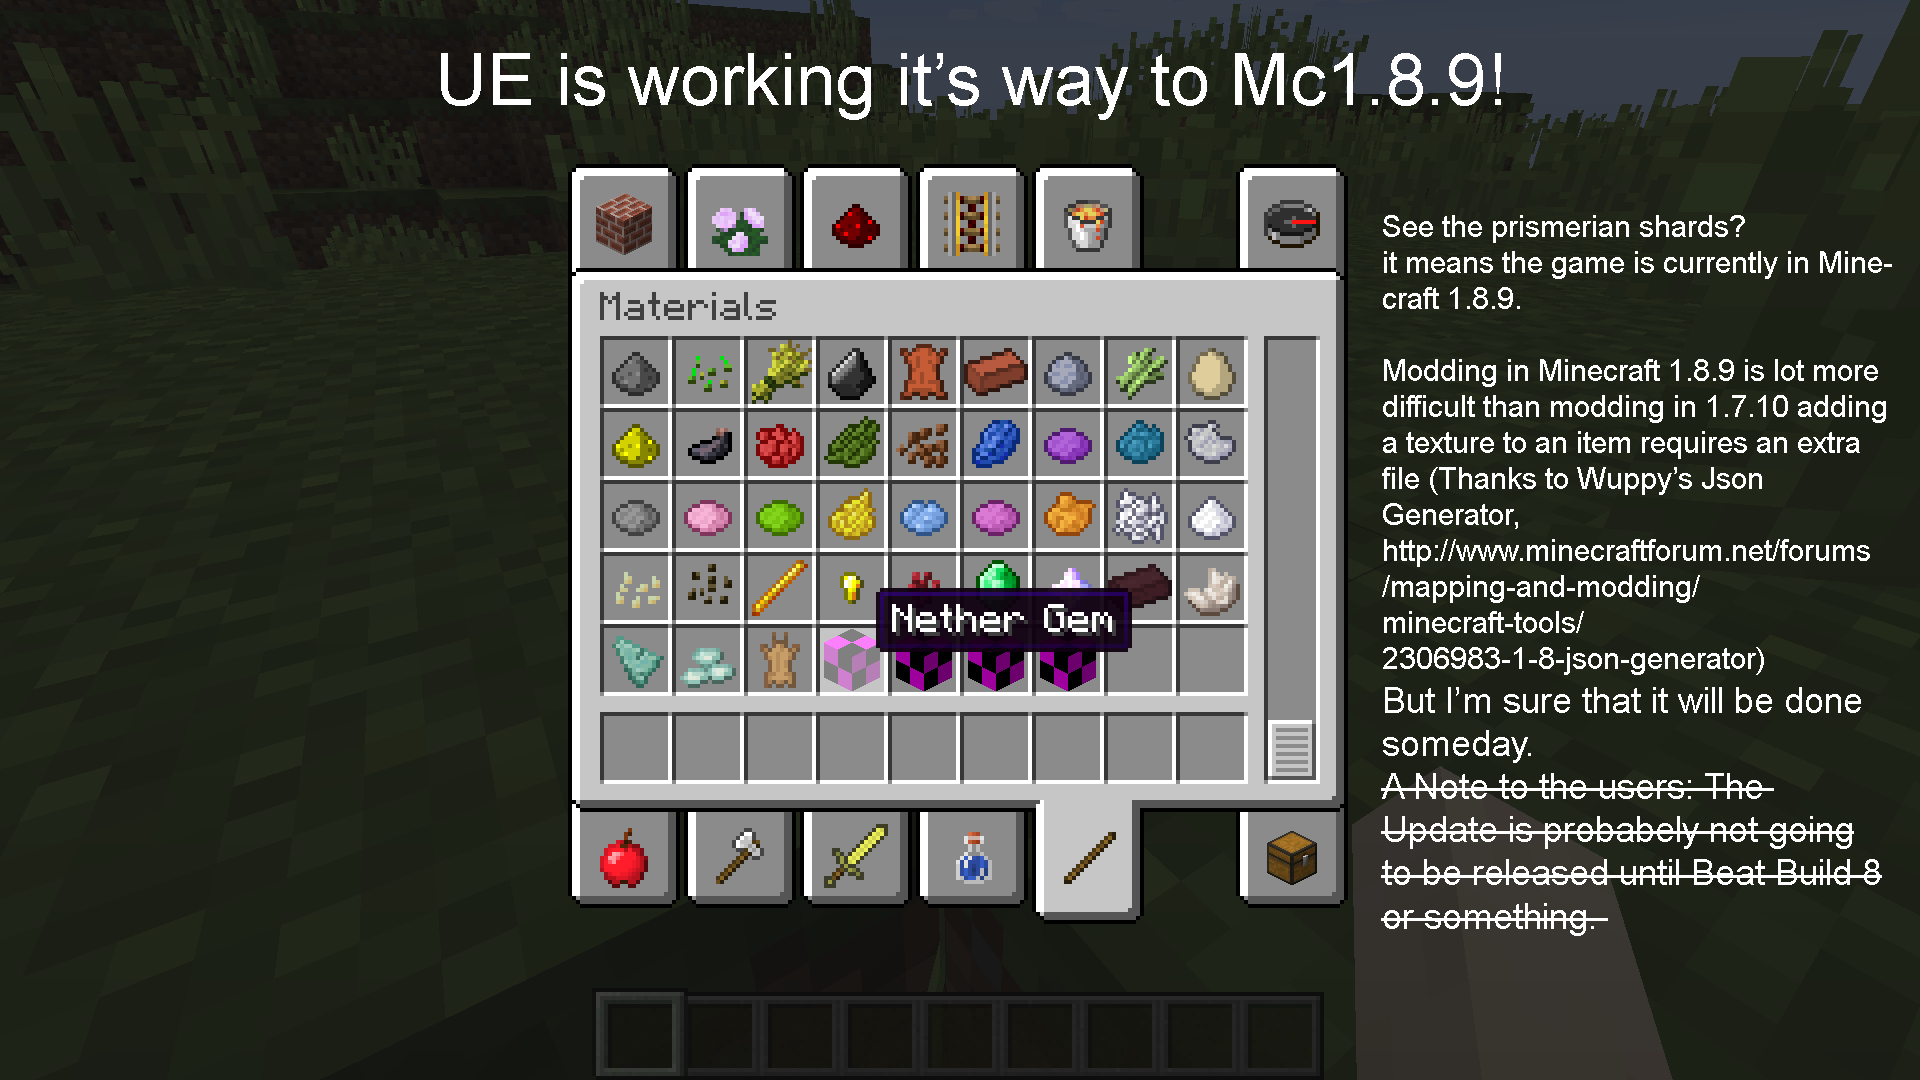 UE is working it's way to Mc 1.8.9